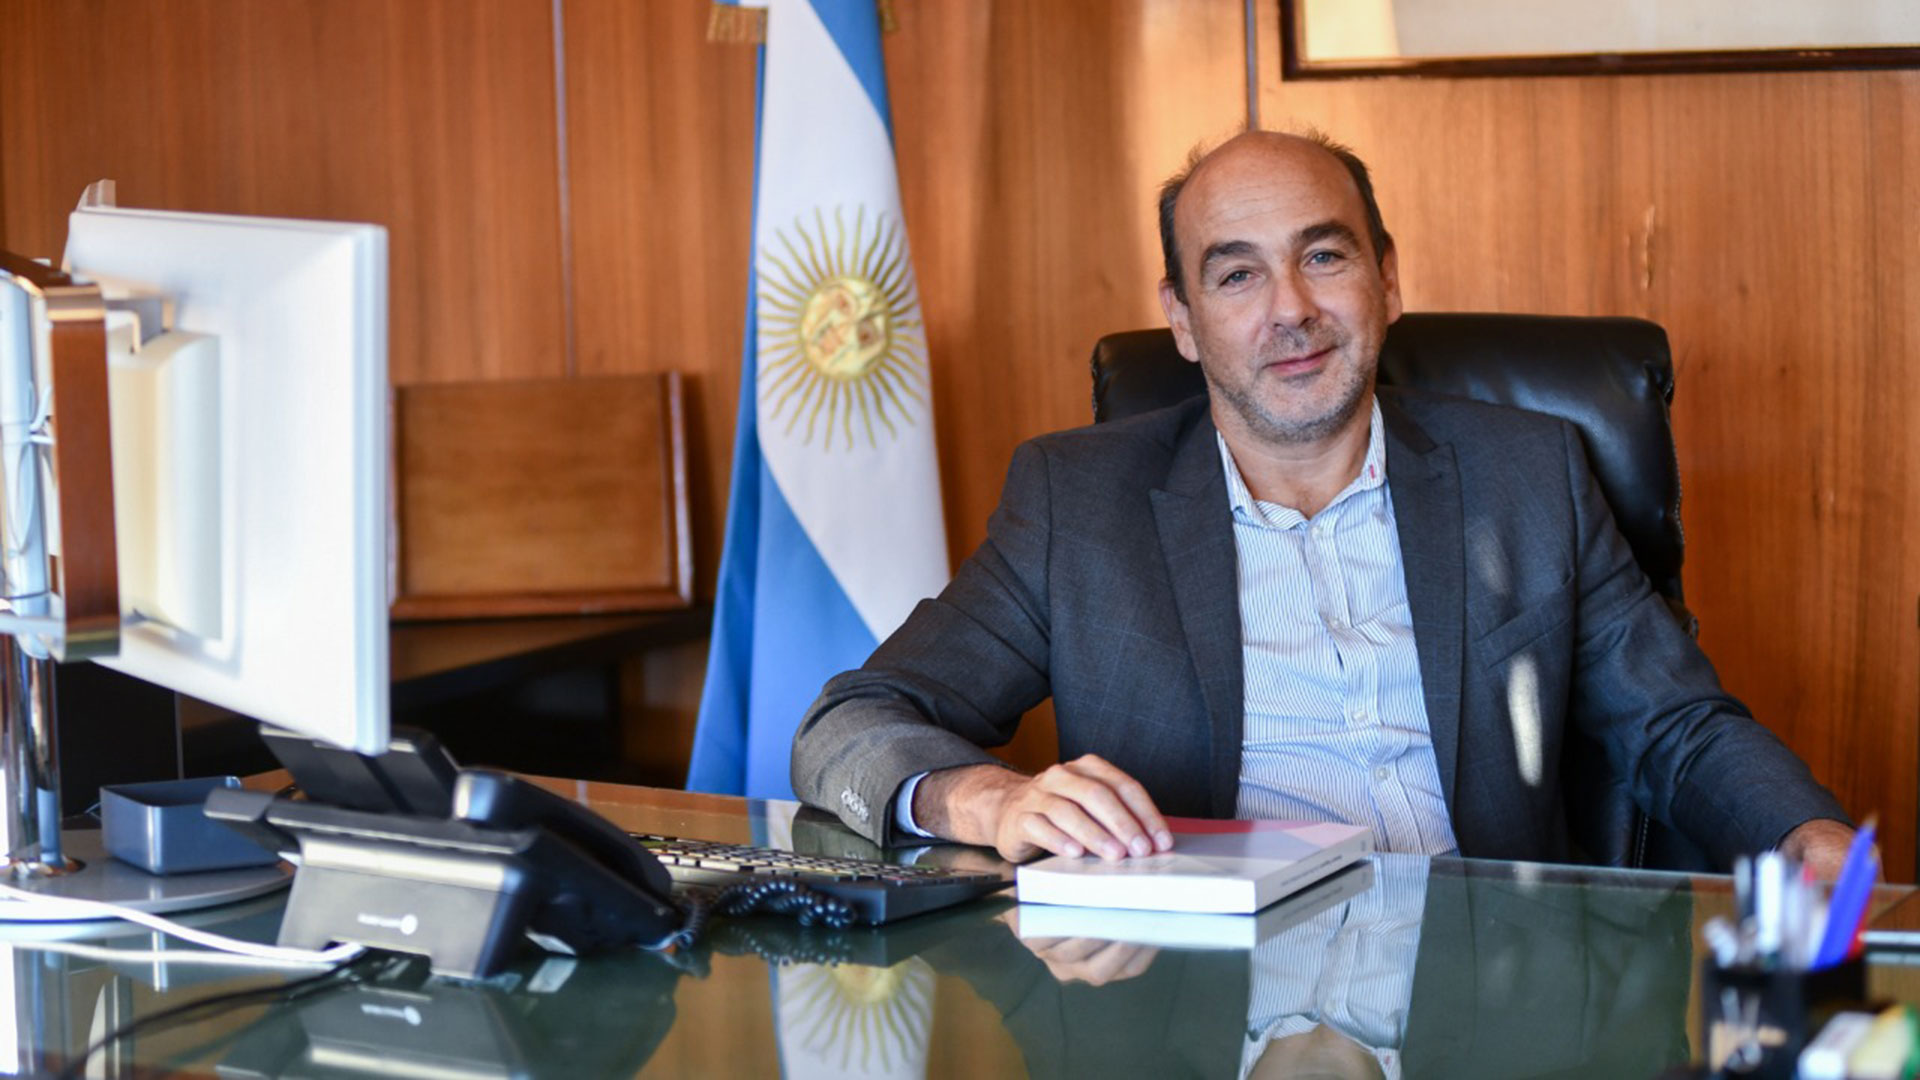 Finance Secretary Eduardo Setti